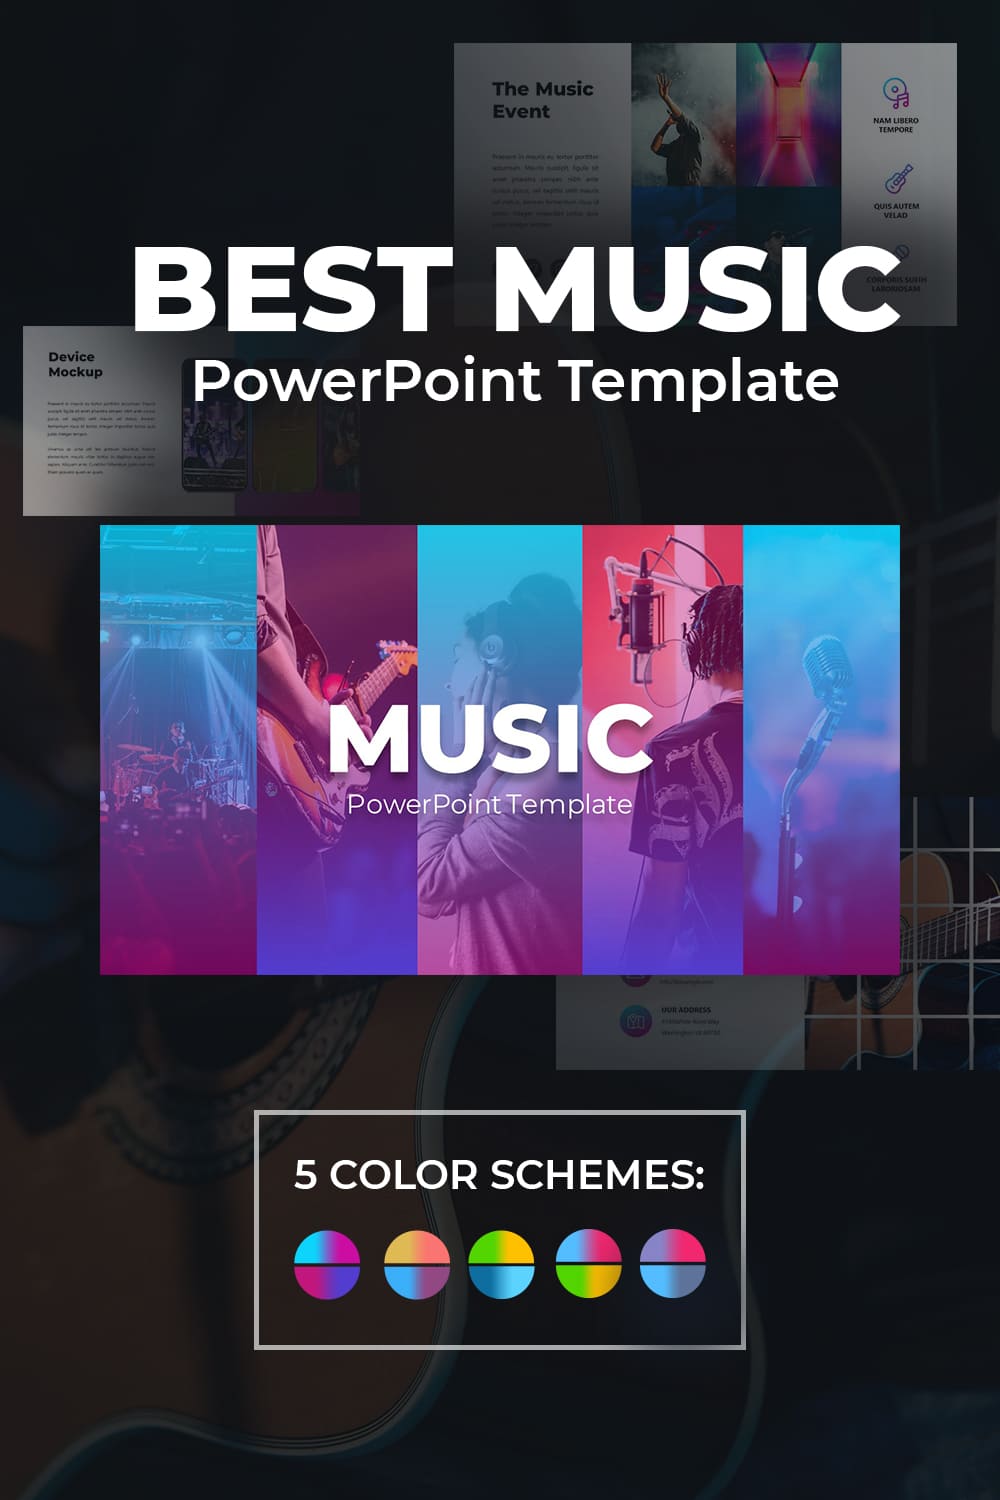 01Preview 50 Slides Music Presentation Template 2021: Powerpoint, Google Slides & Keynote by MasterBundles Pinterest Collage Image.